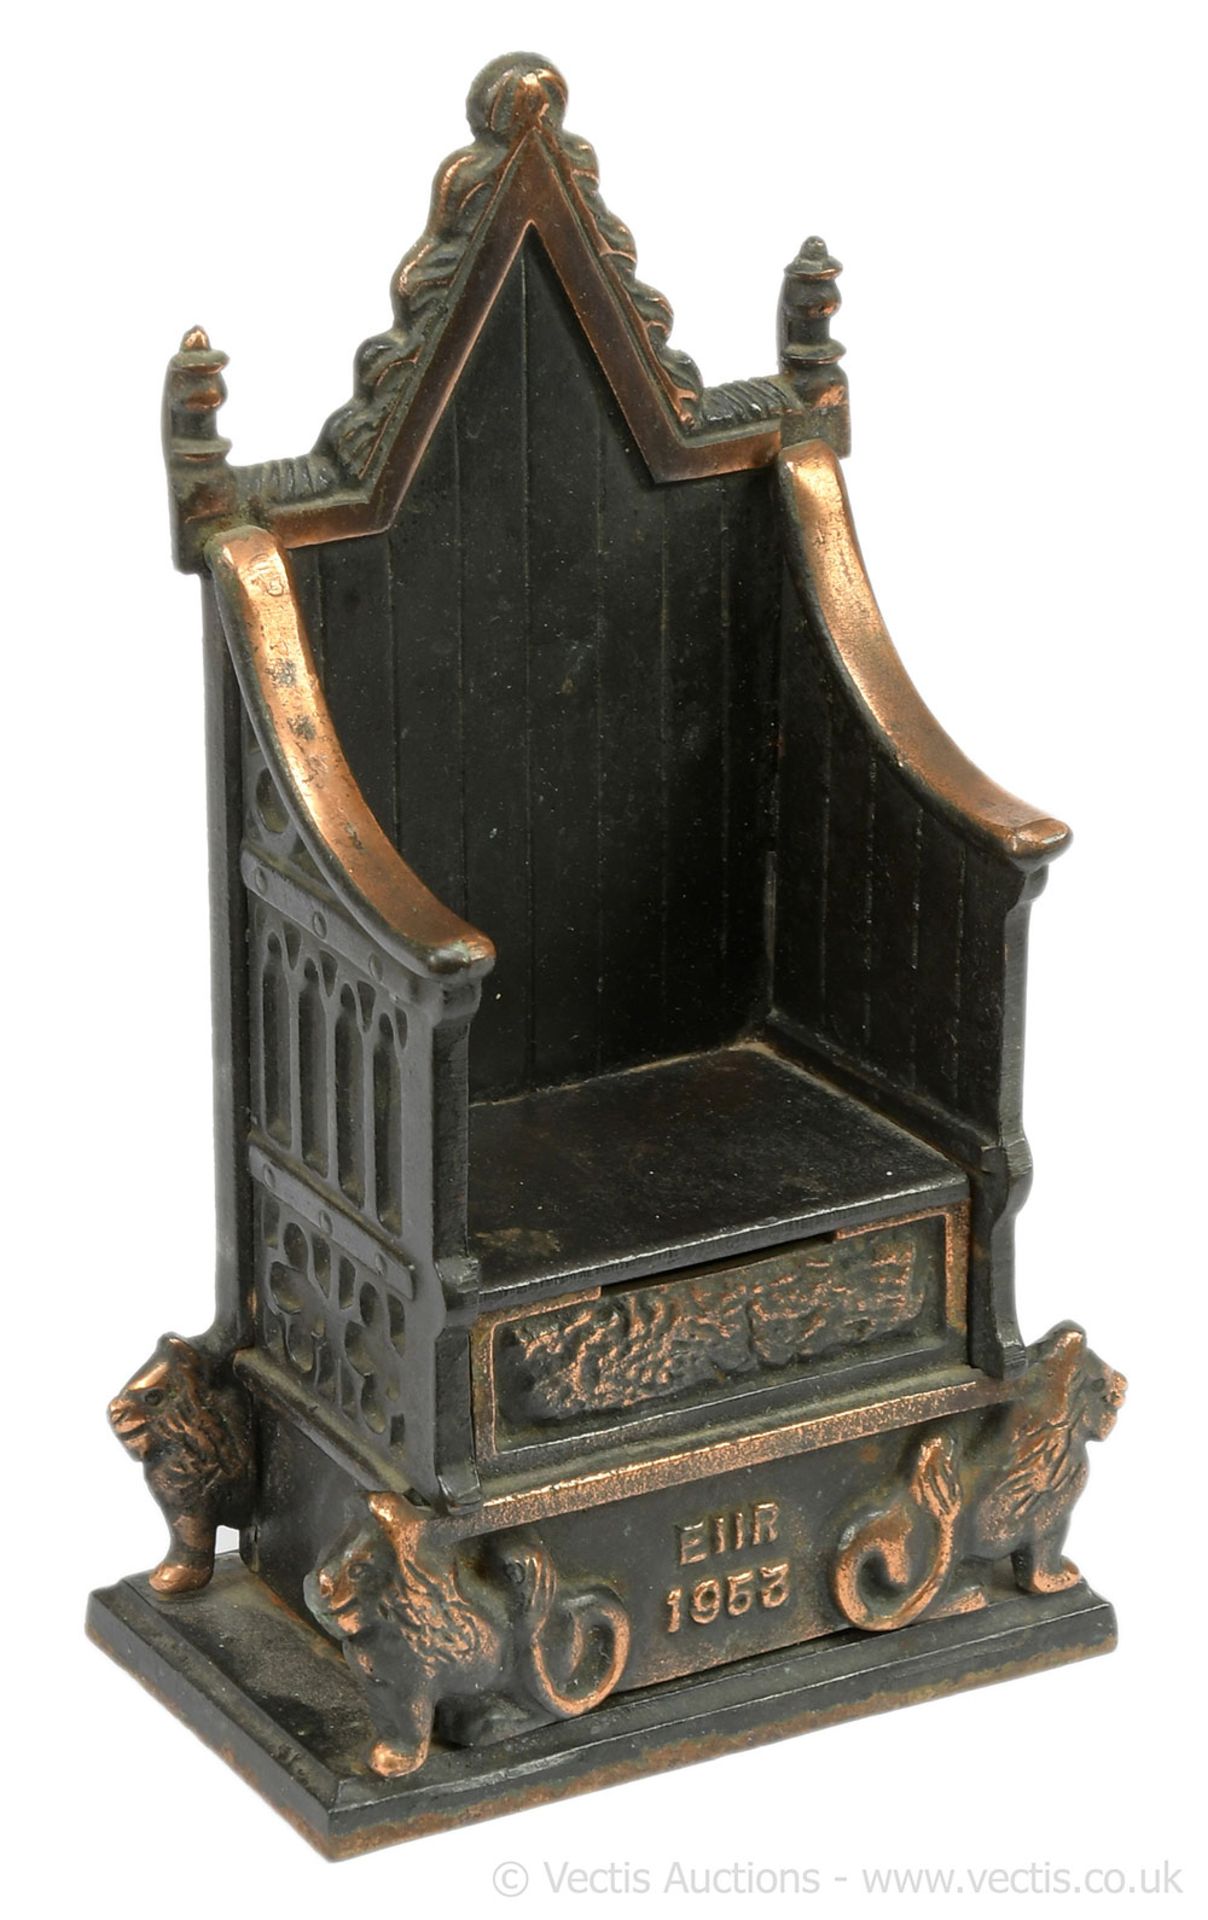 John Harper EIIR 1953 Coronation Chair vintage